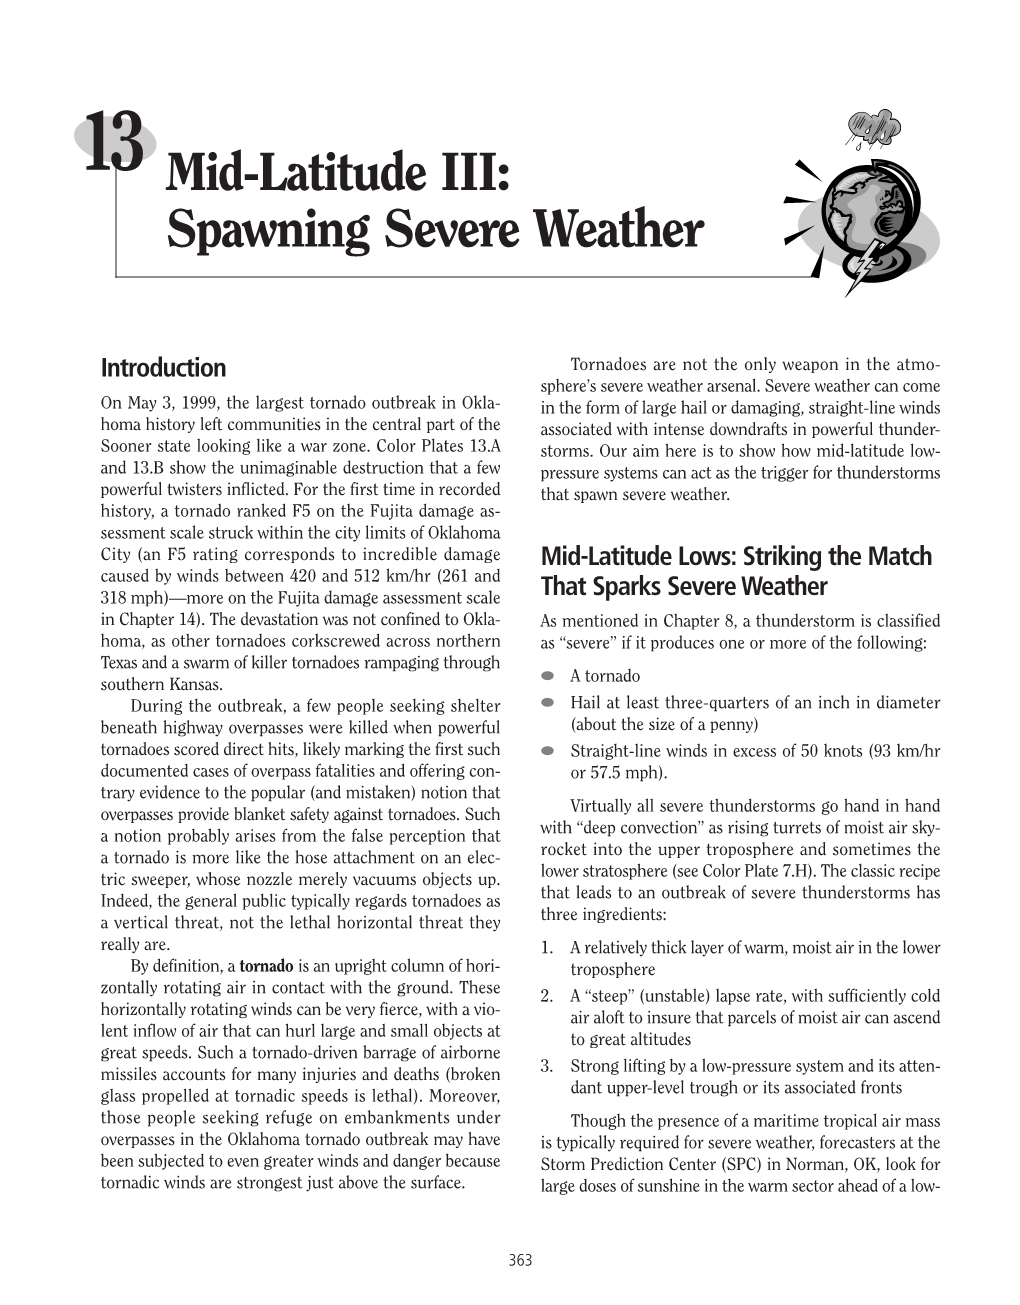 Mid-Latitude III: Spawning Severe Weather